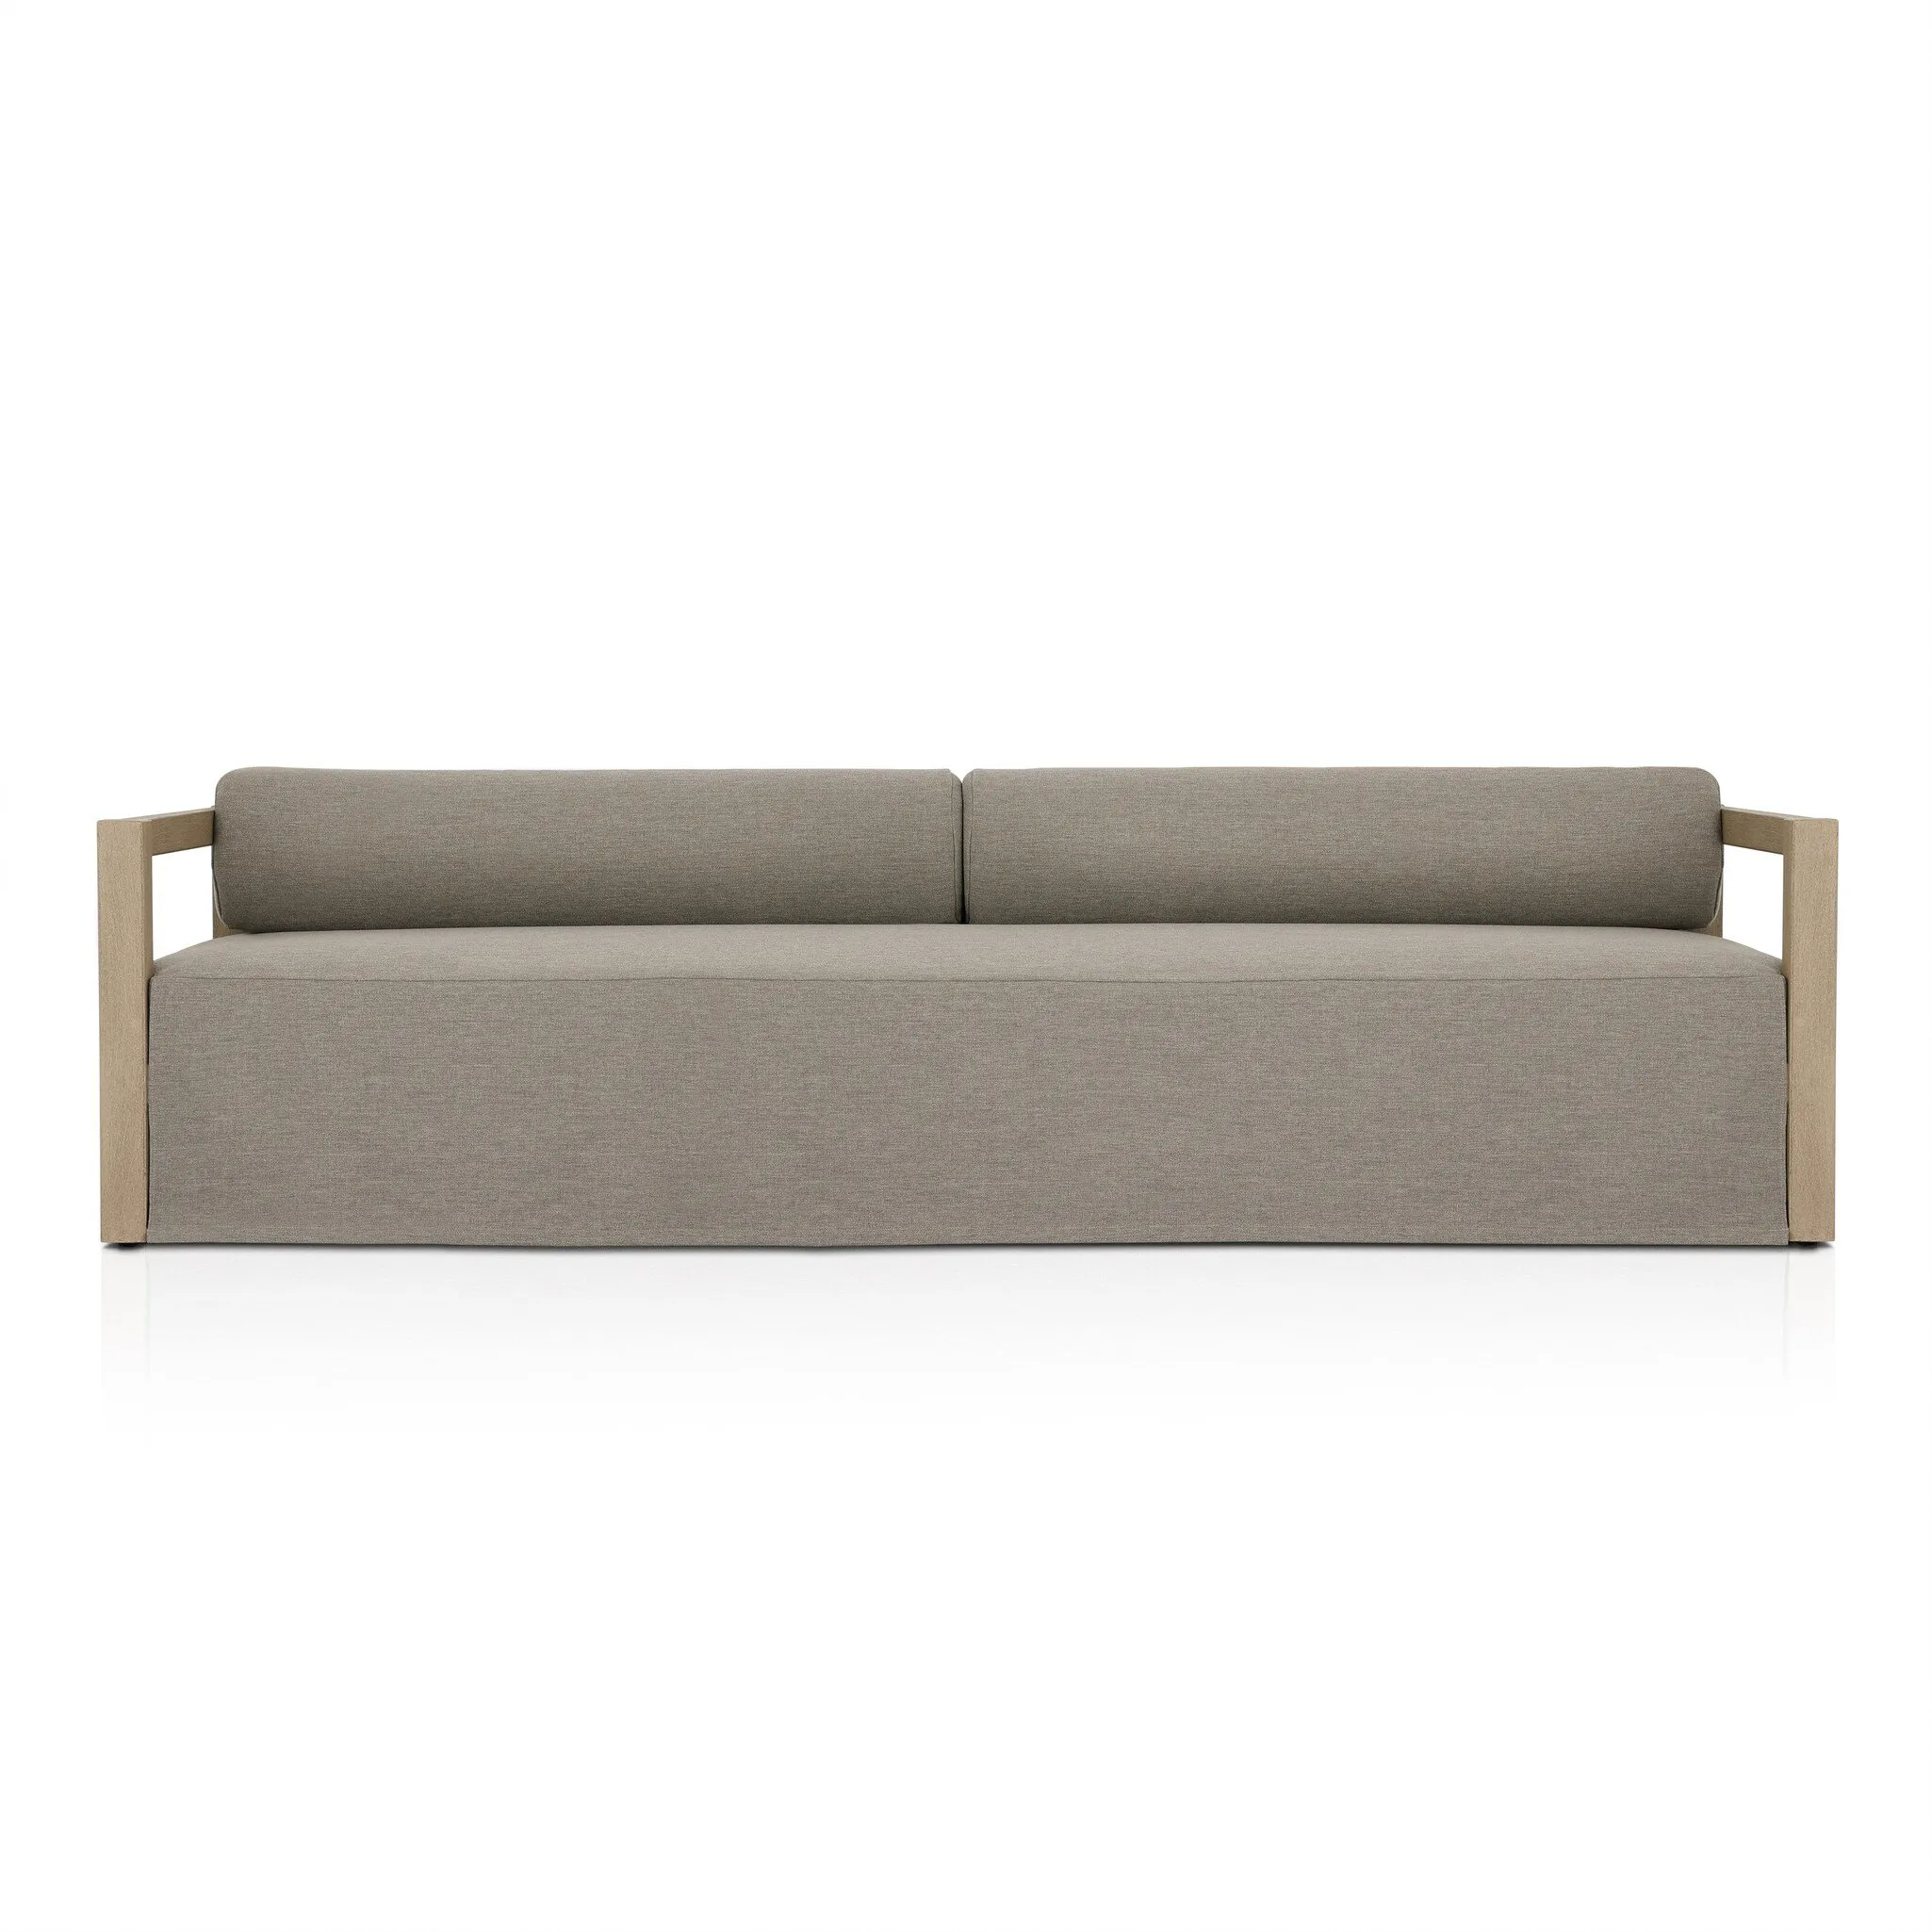 Laskin Outdoor Sofa